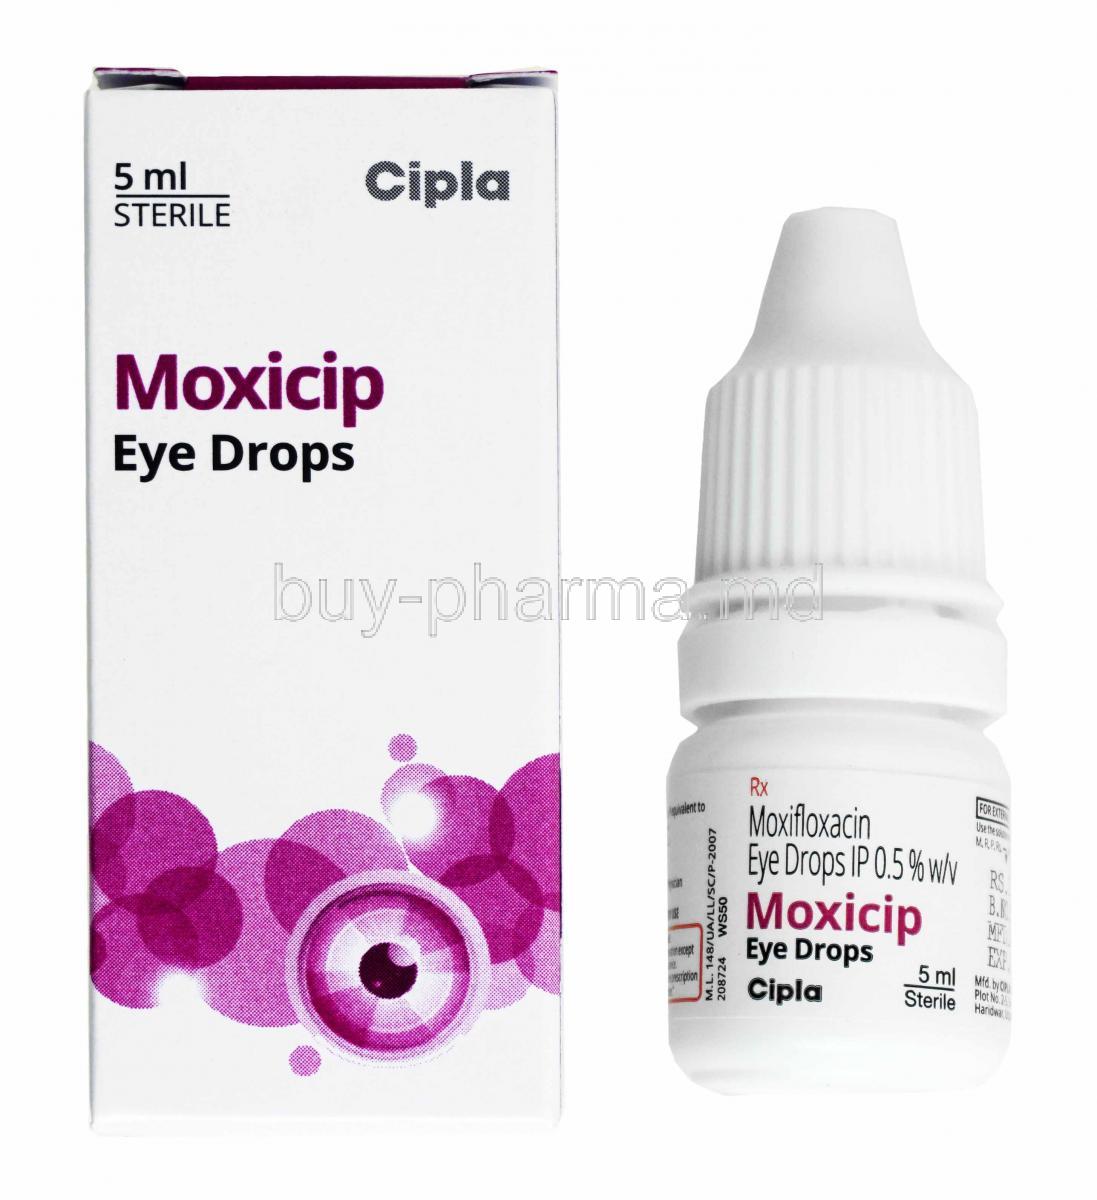 Moxicip Eye Drops, Moxifloxacin box and bottle